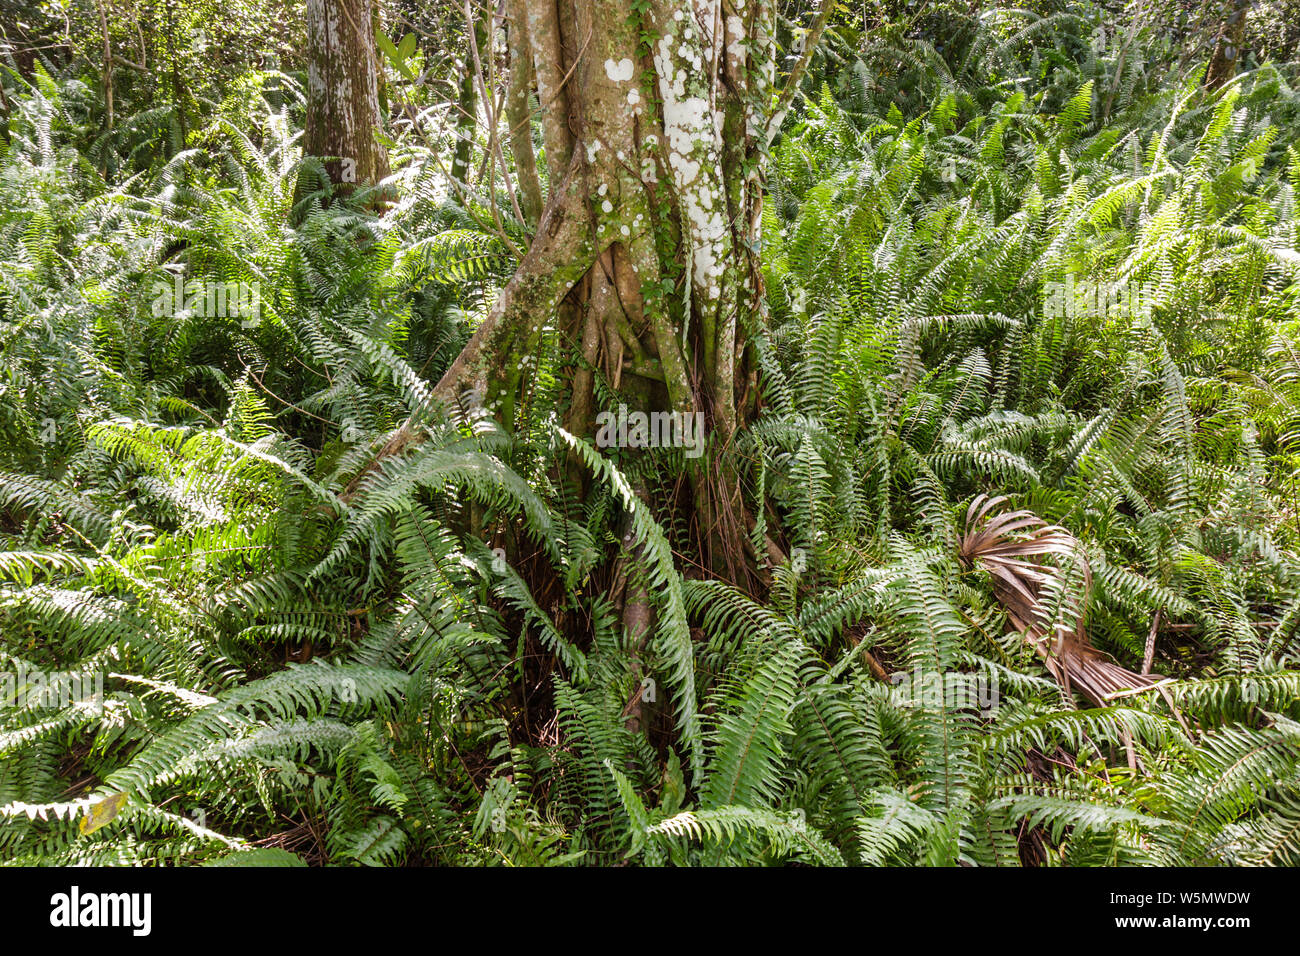 Fort Ft. Lauderdale Florida,Coral Springs,Tall Cypress Natural Area,swamp fern,strangler fig tree,native species,plant,ecology,ecosystem,vegetation,ha Stock Photo